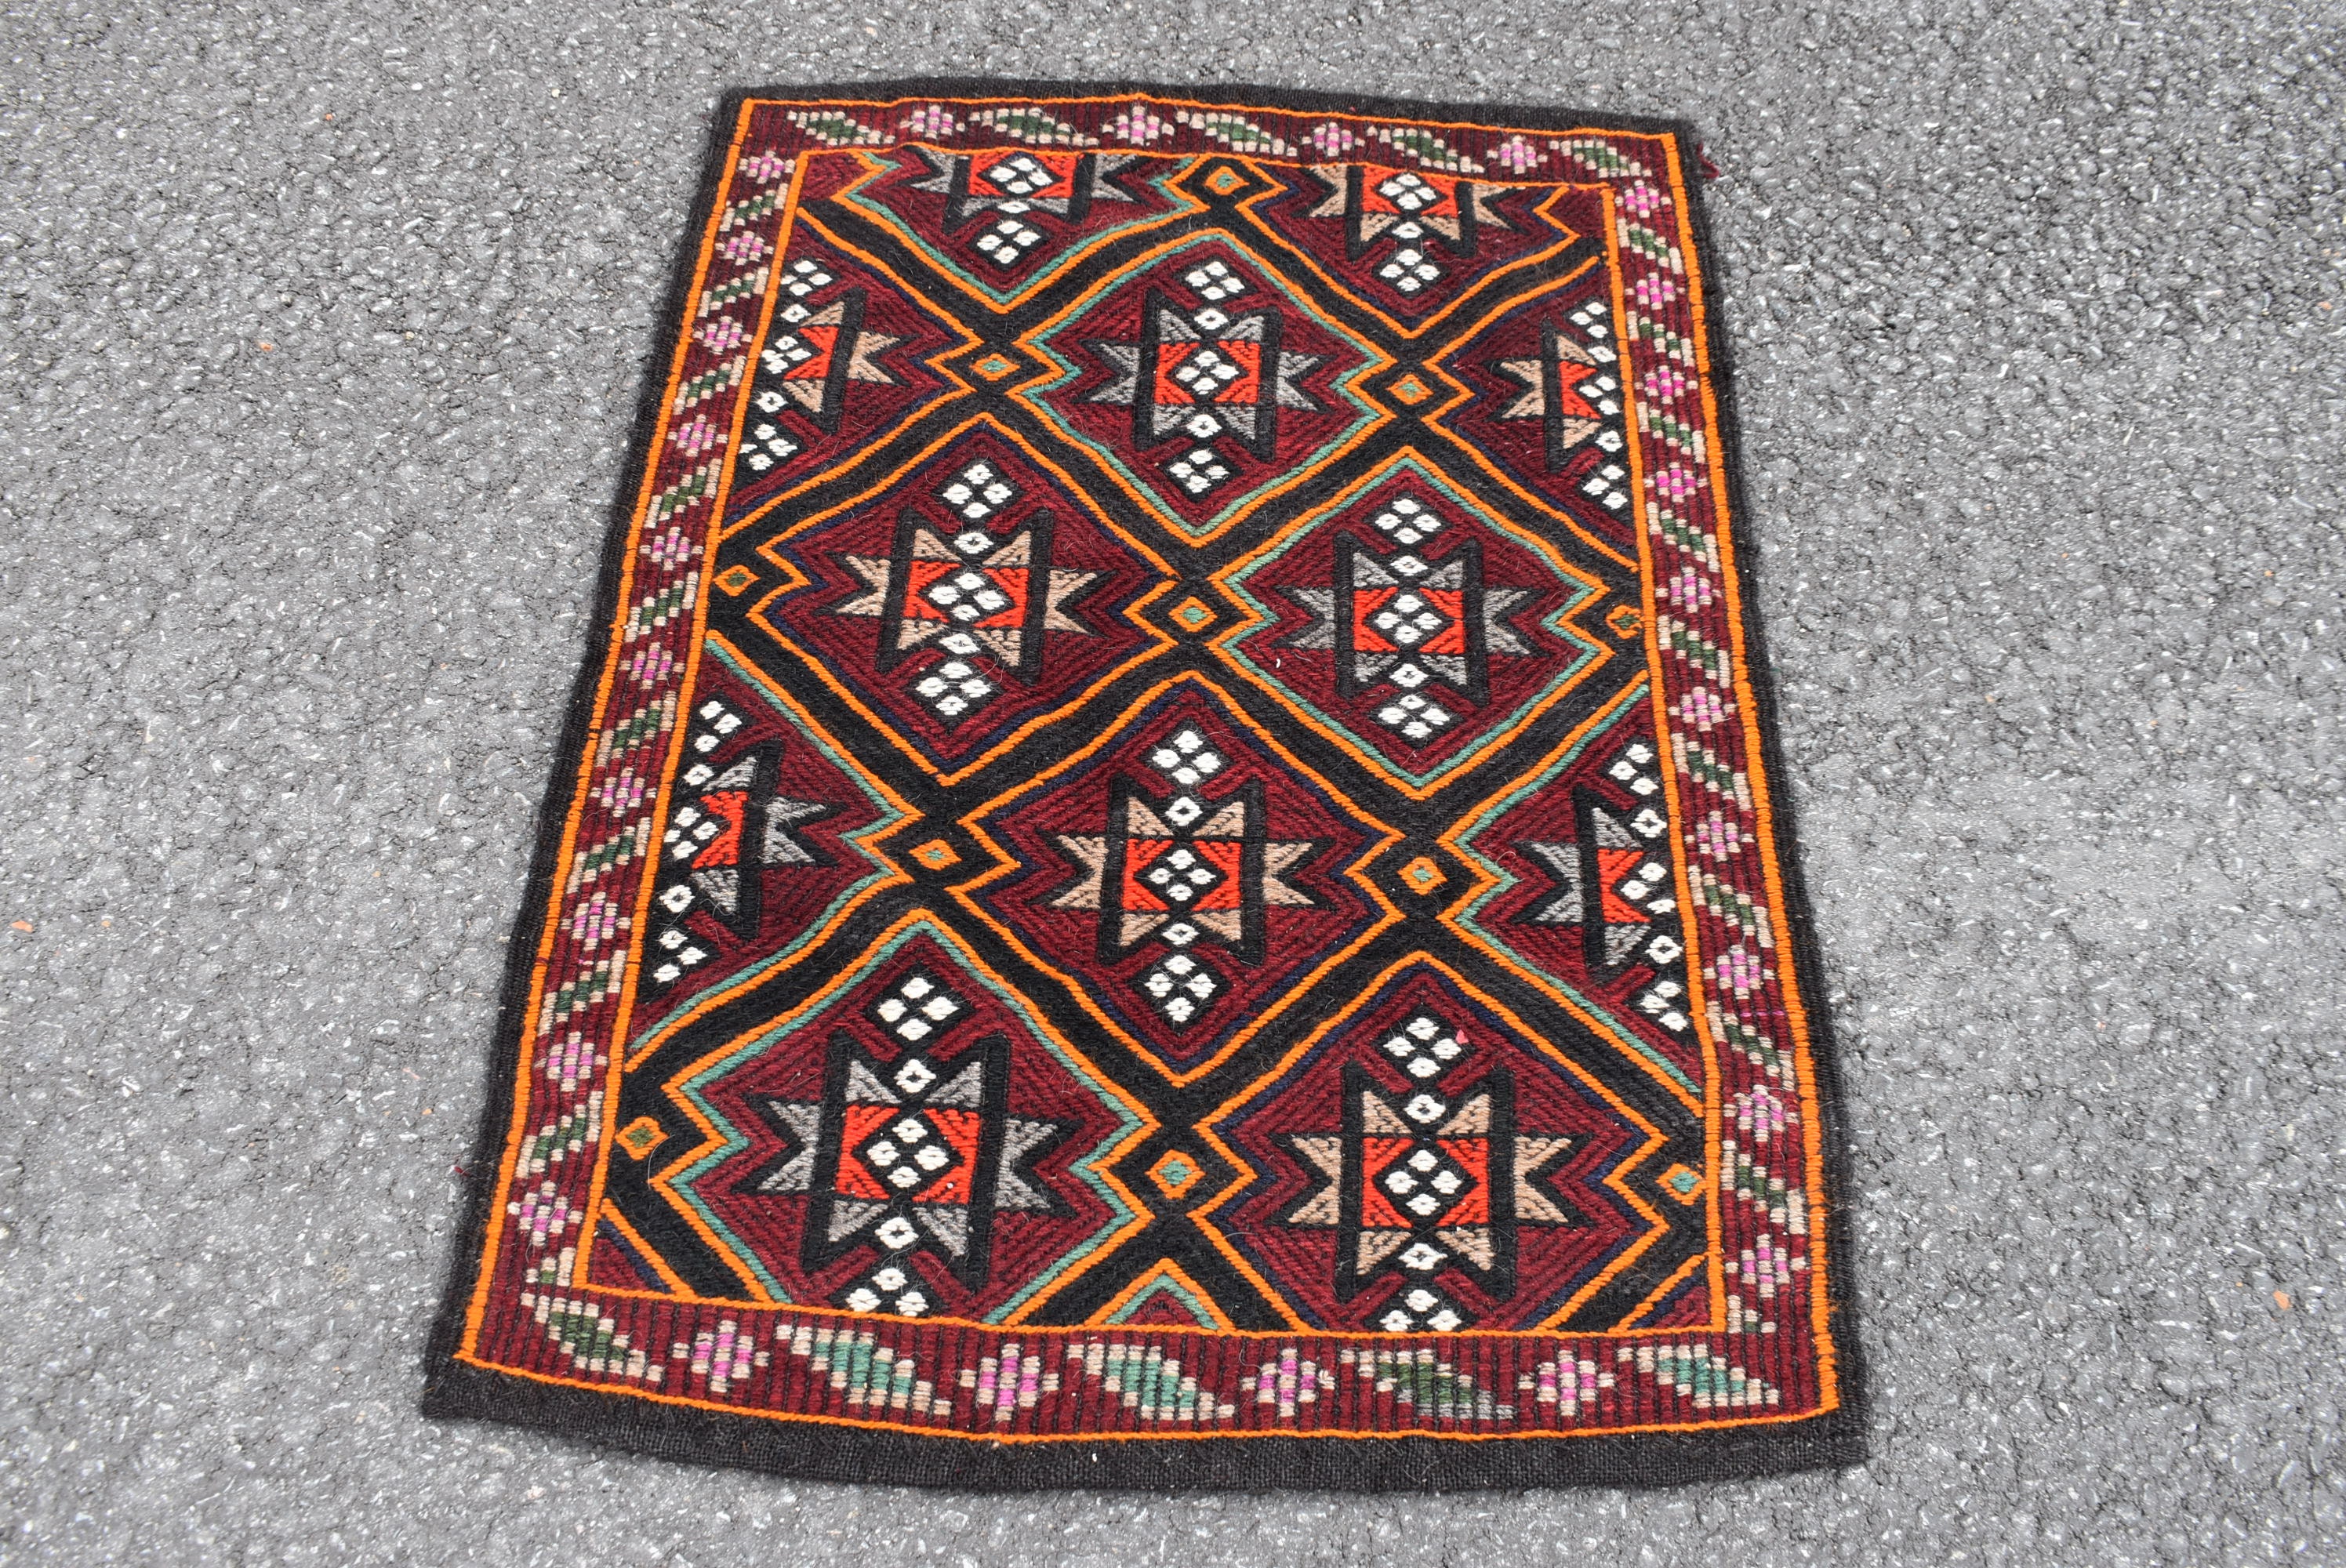 Floor rug Aztec rug Wool rug zd3406 Vintage rug Turkish rug Ethnic rug Free Shipping 7.5 x 10.3 ft Large rug Home decor kilim rug